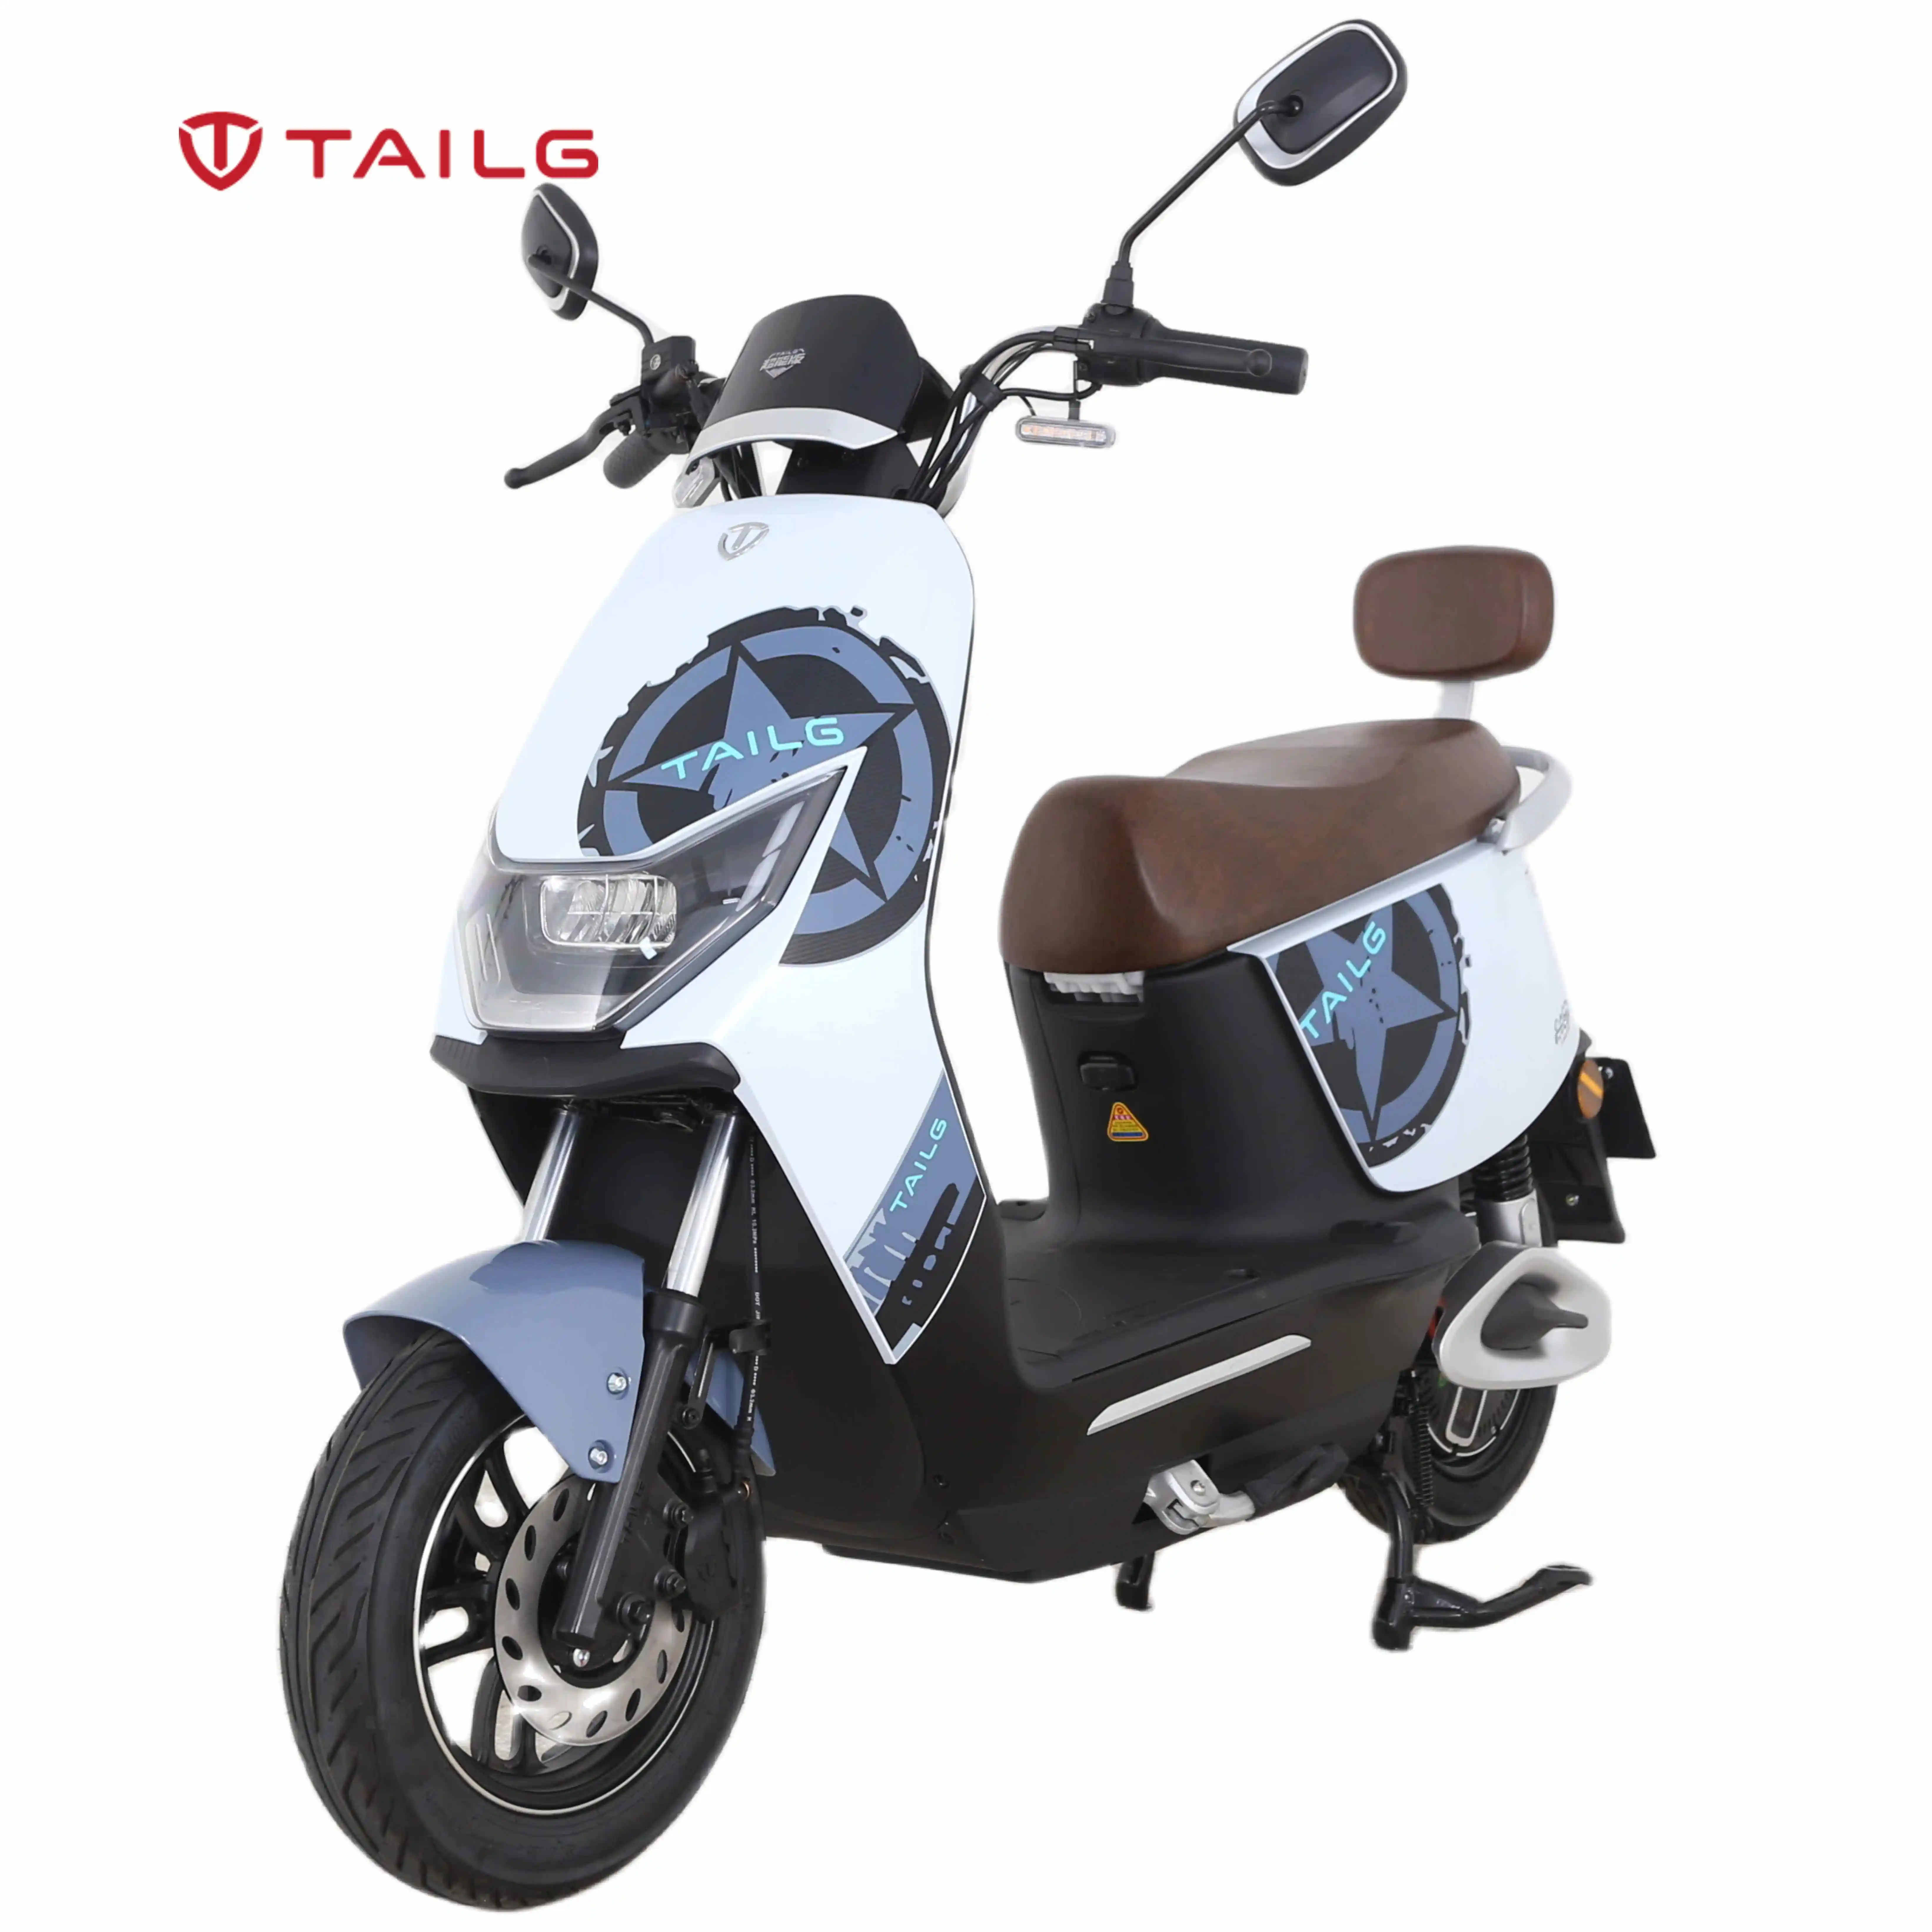 TAILG זול במפעל מחיר 75 ק"מ ארוך טווח 250CC בסין E טוסטוס וספה אופנוע חשמלי למבוגרים למכירה